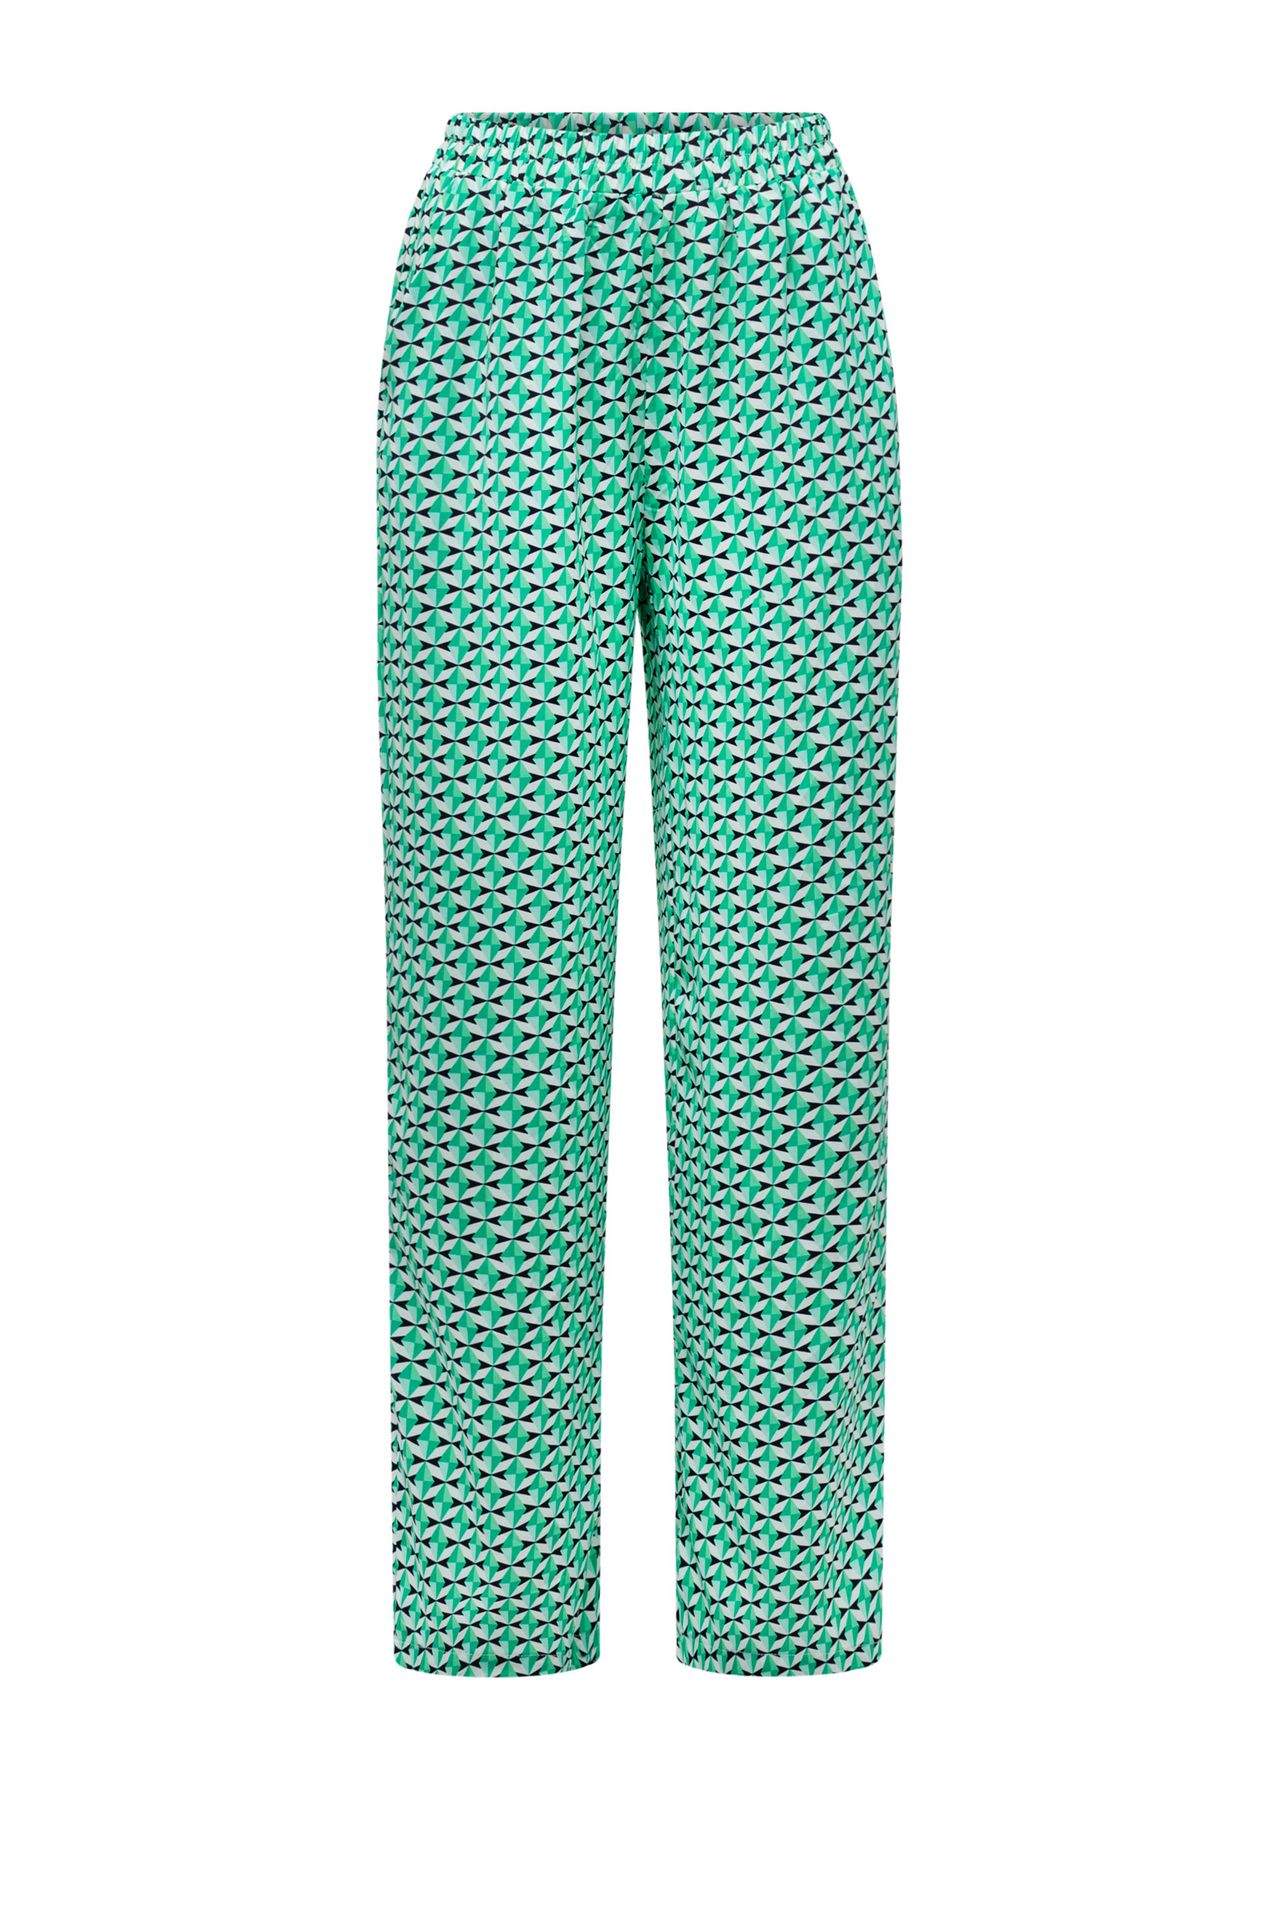 Norah Groene pantalon green multicolor 213739-520